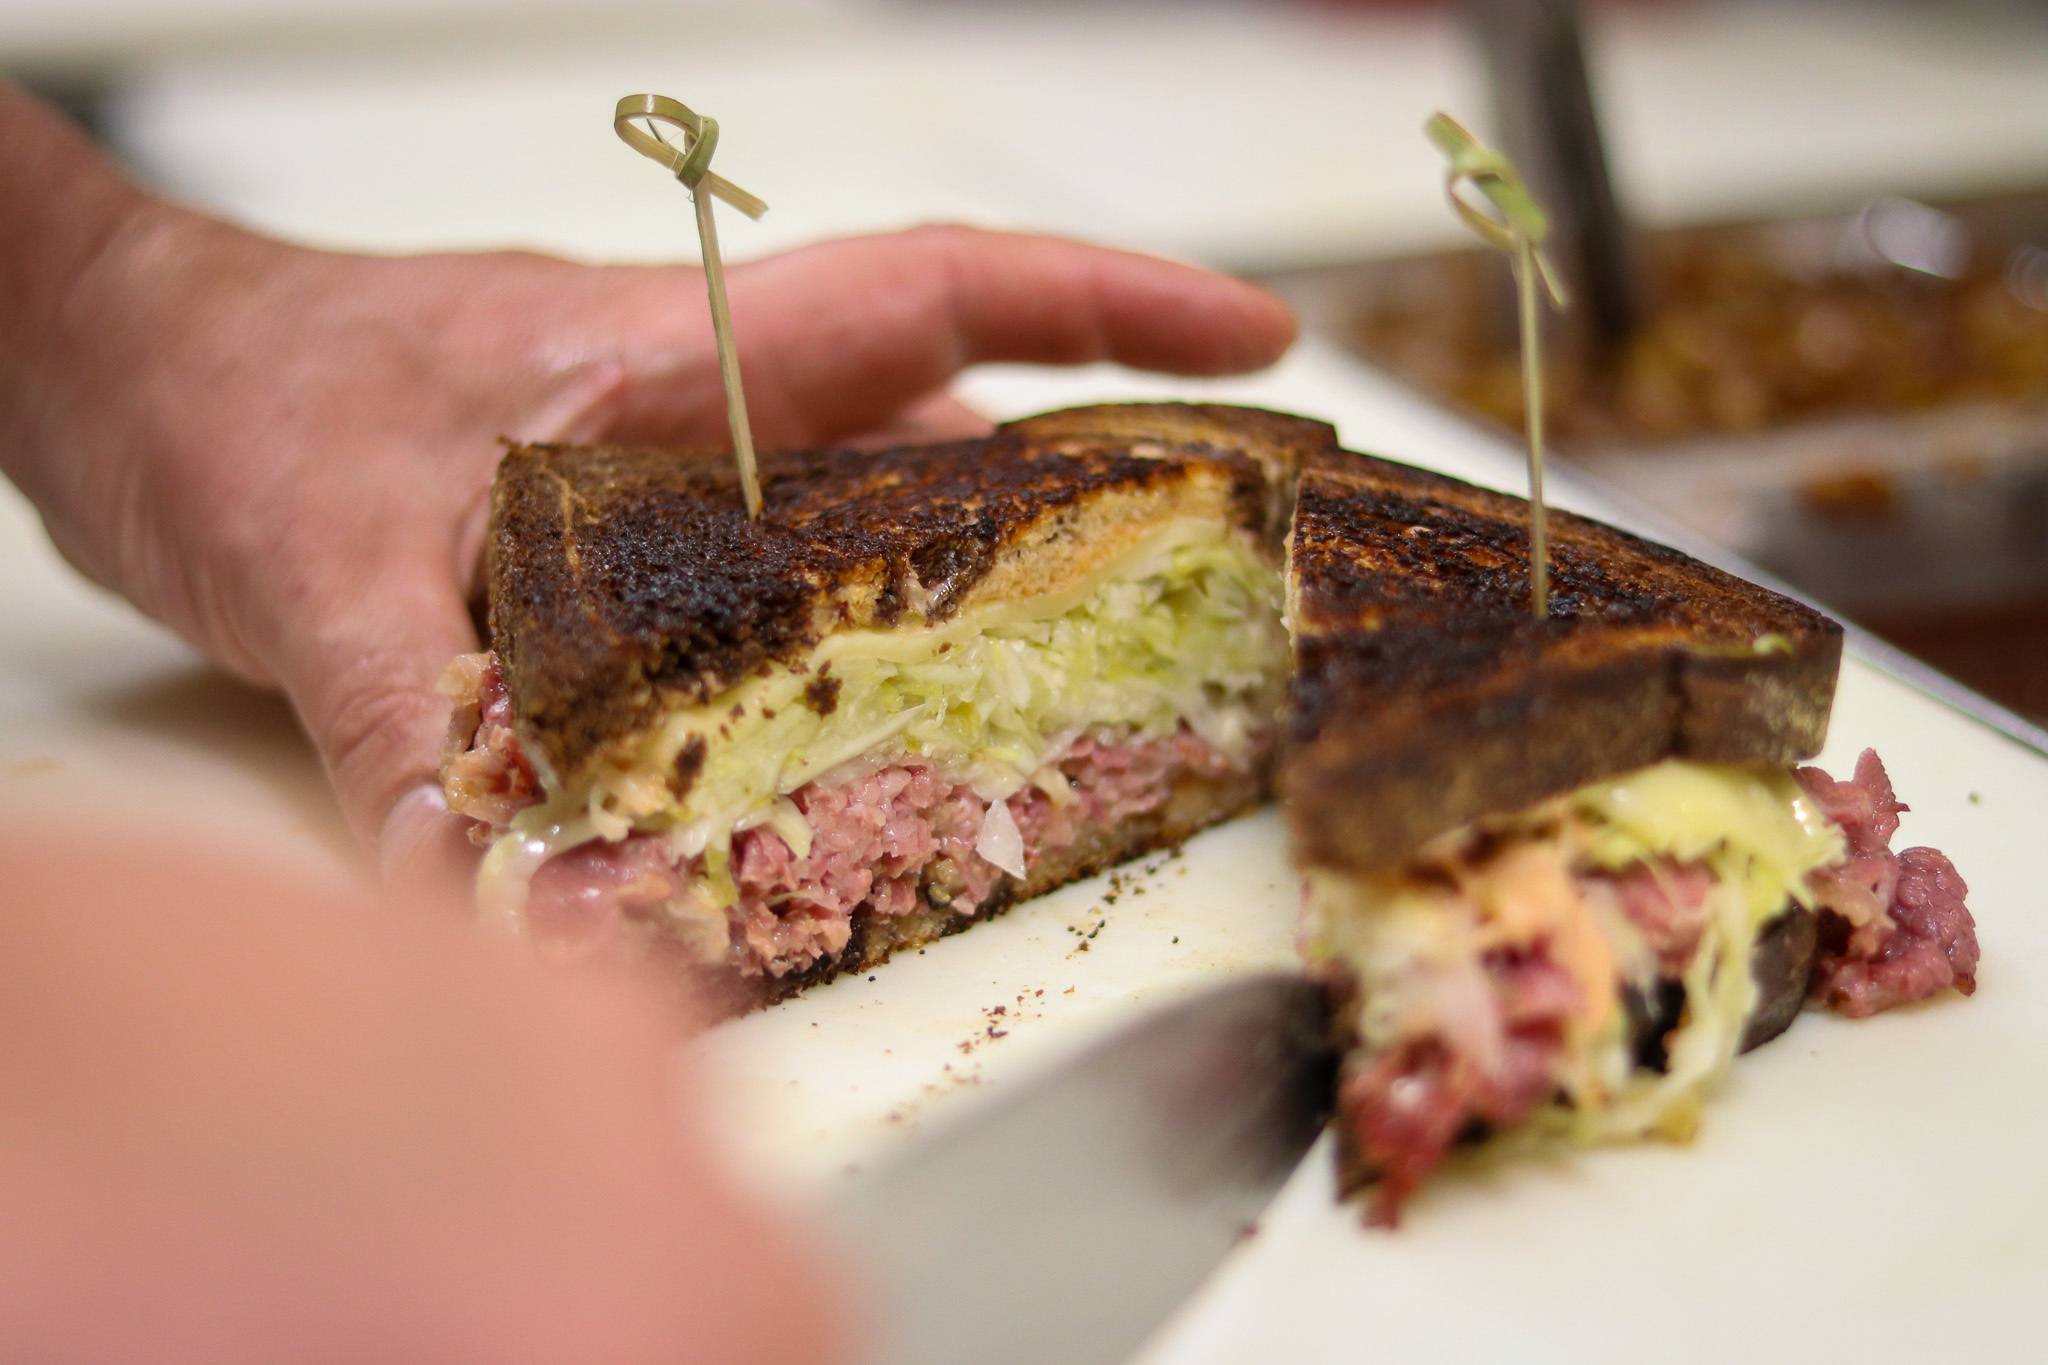 Chef cutting a reuben sandwich in half